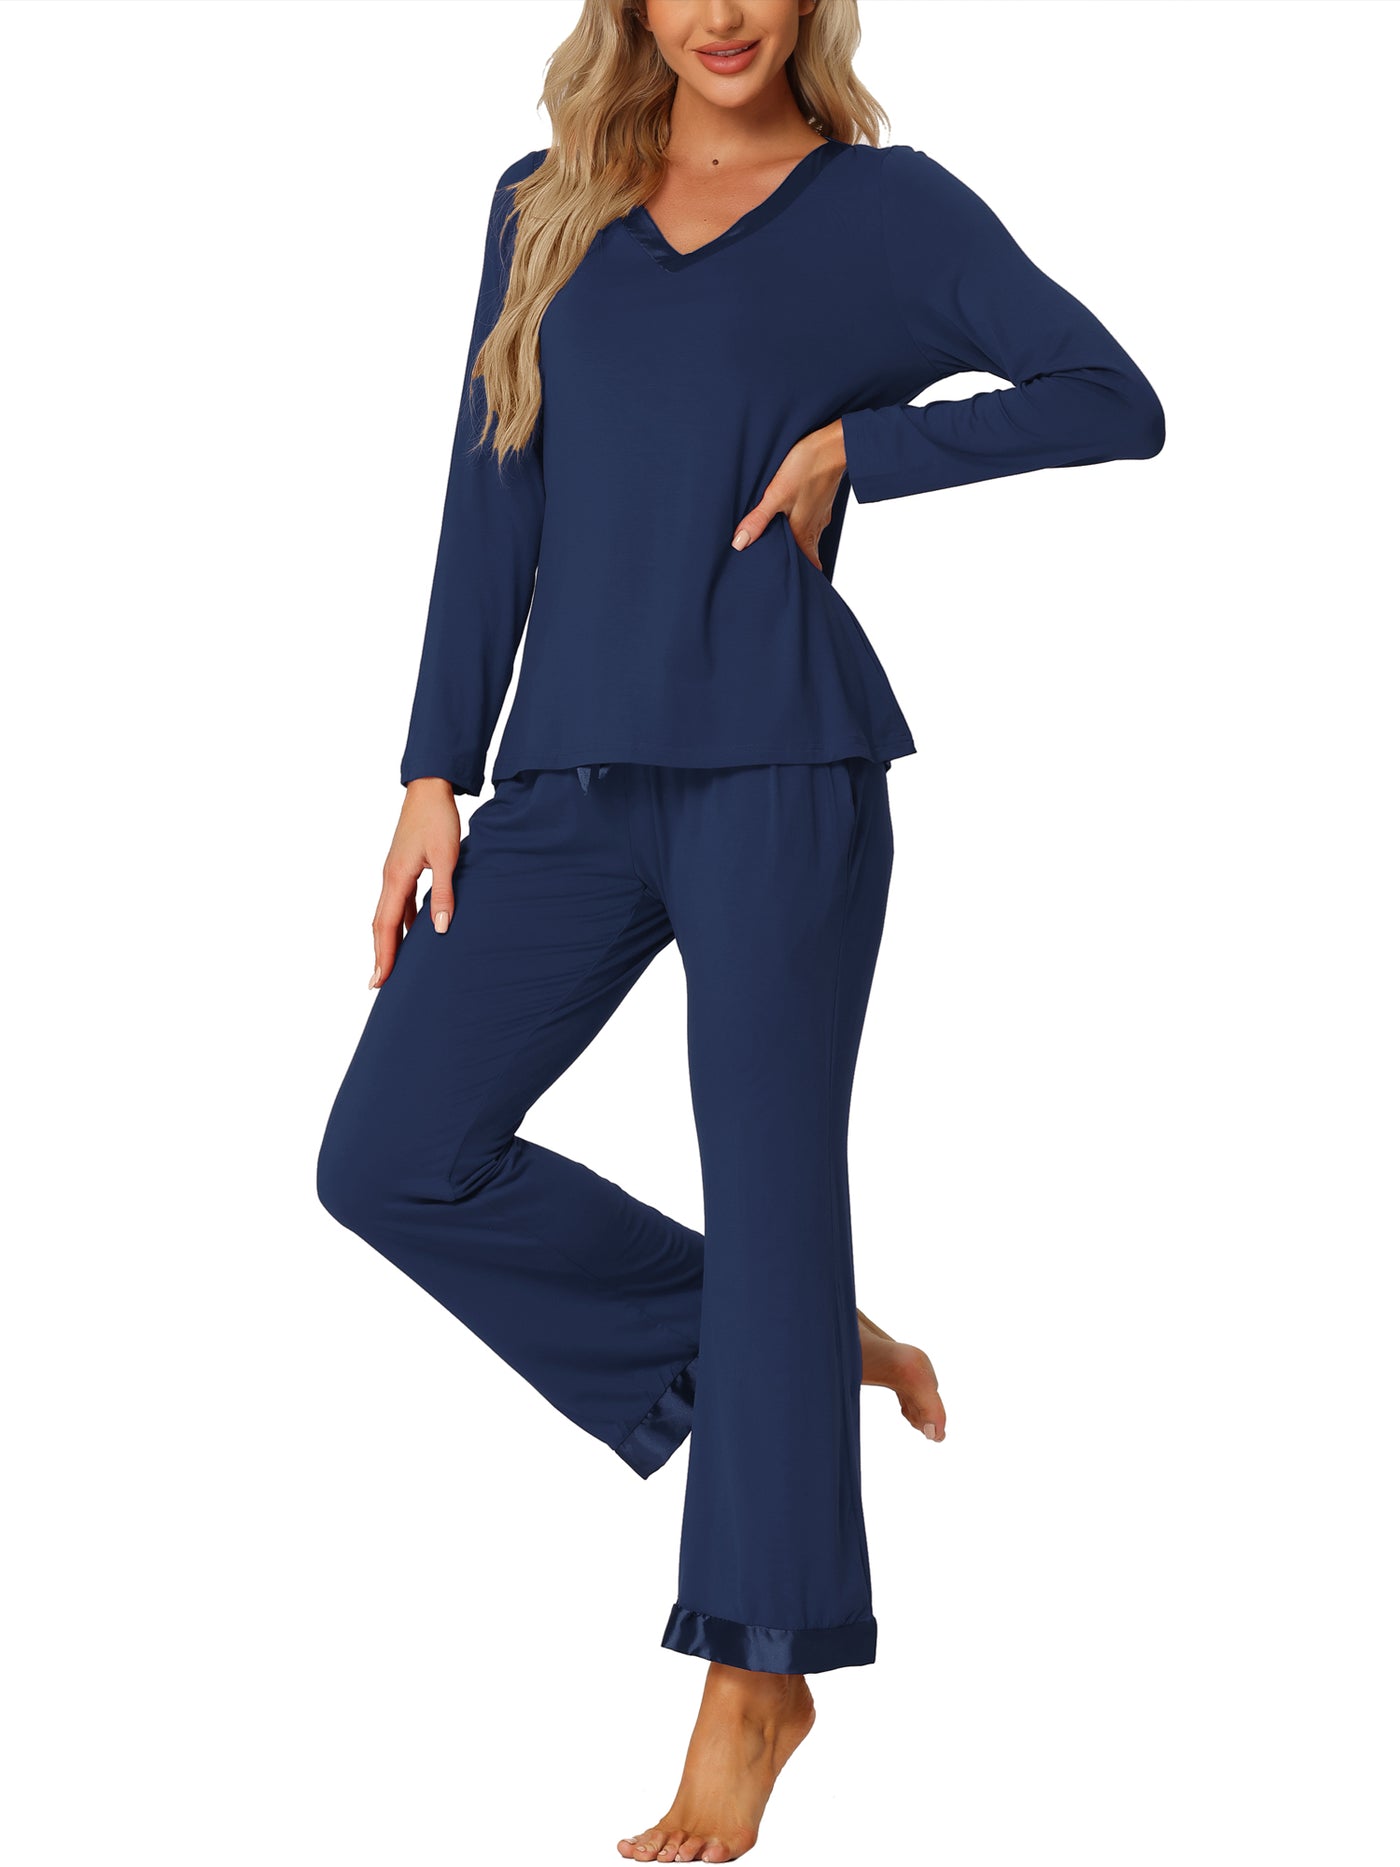 Bublédon Women's Long Sleeve V Neck Shirt and Pants Sleepwear Pajama Sets